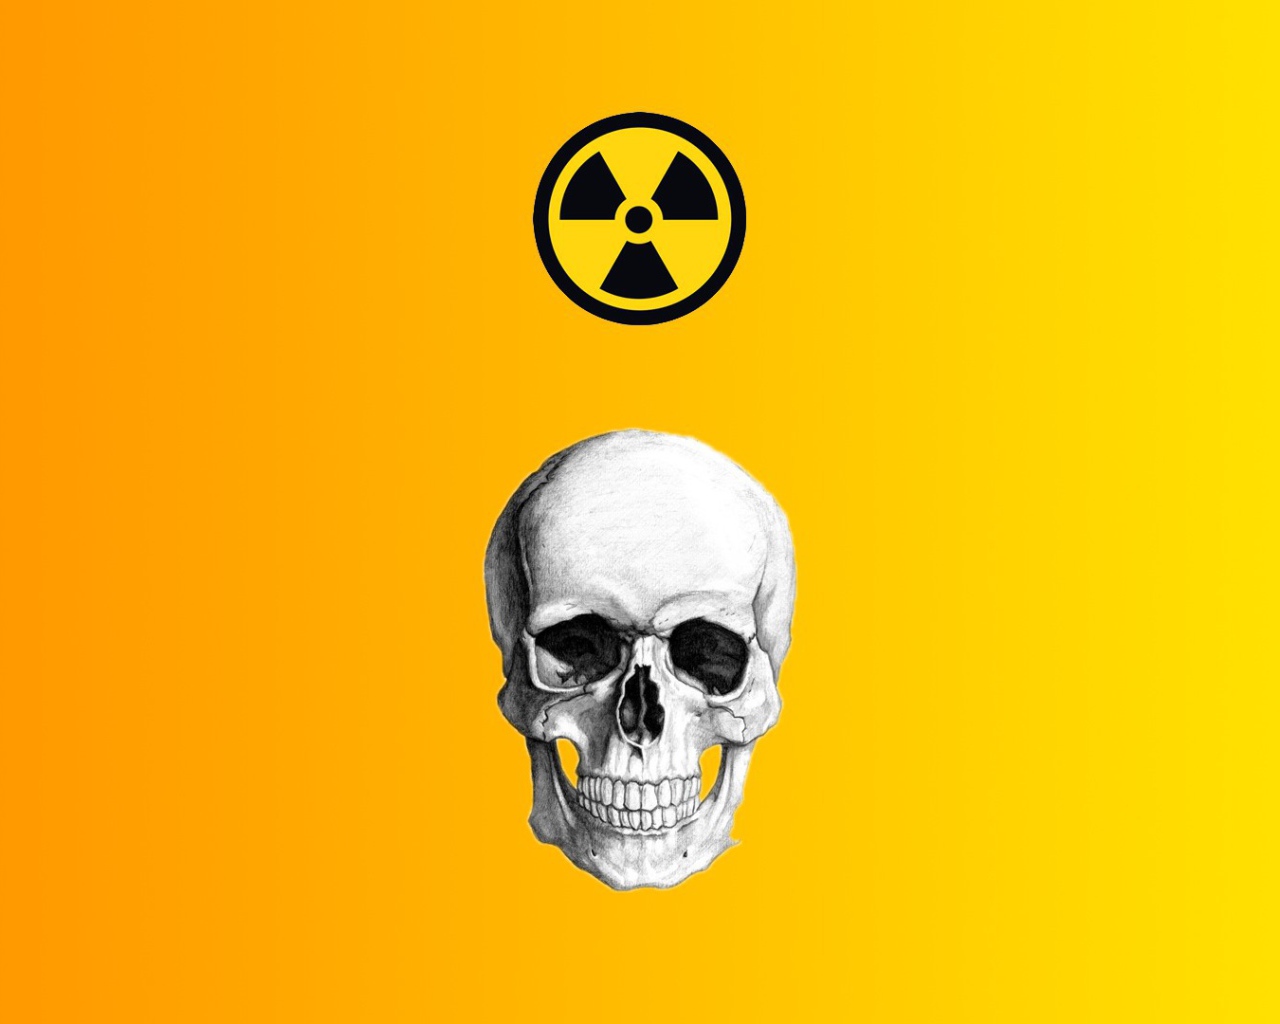 Skull and radioactive danger sign